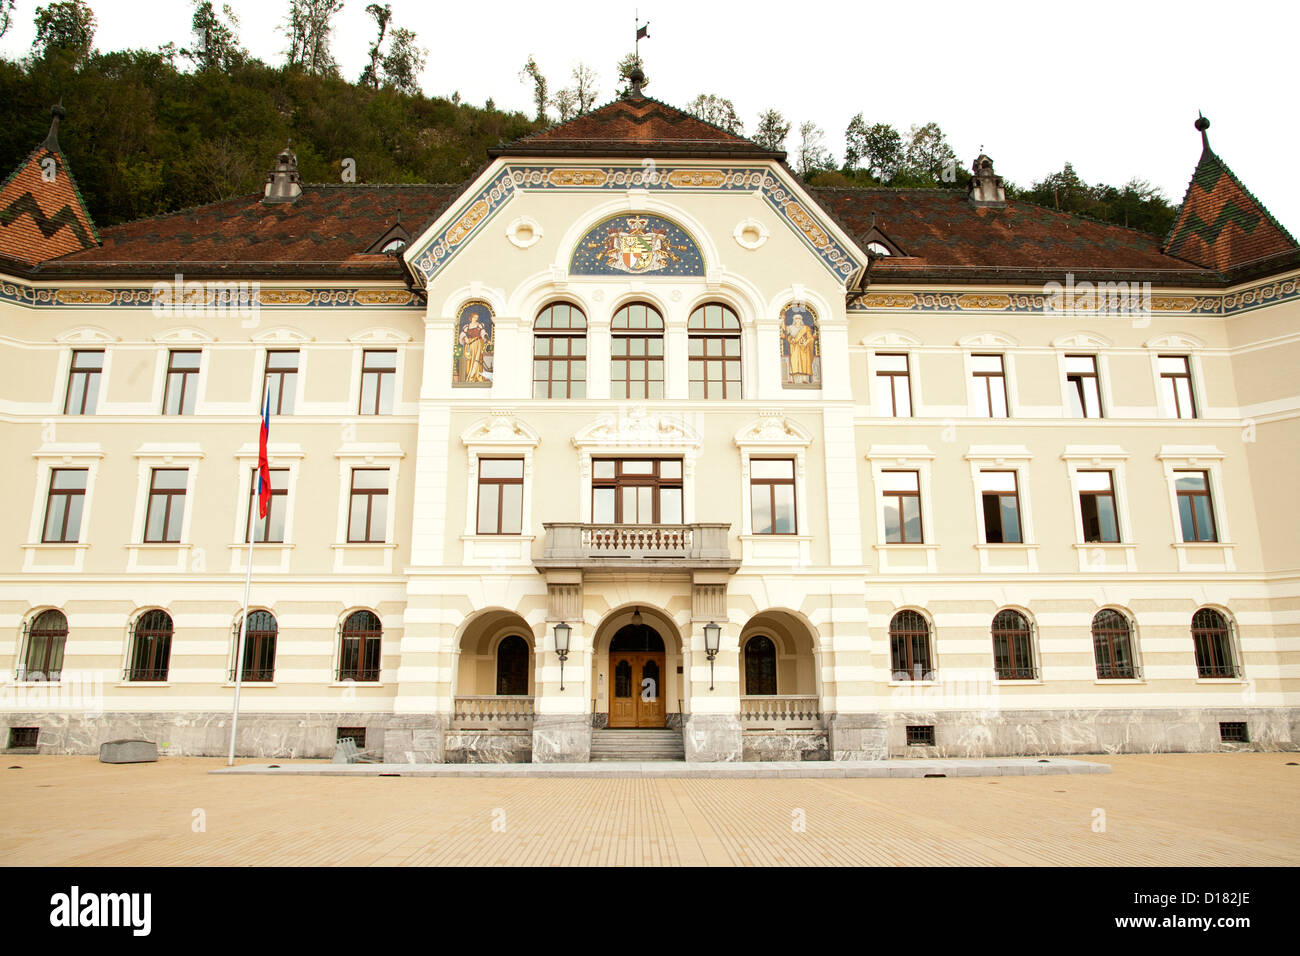 The Regierungsgebäude (Government / parliament building) in Vaduz, the capital of the Principality of Liechtenstein. Stock Photo